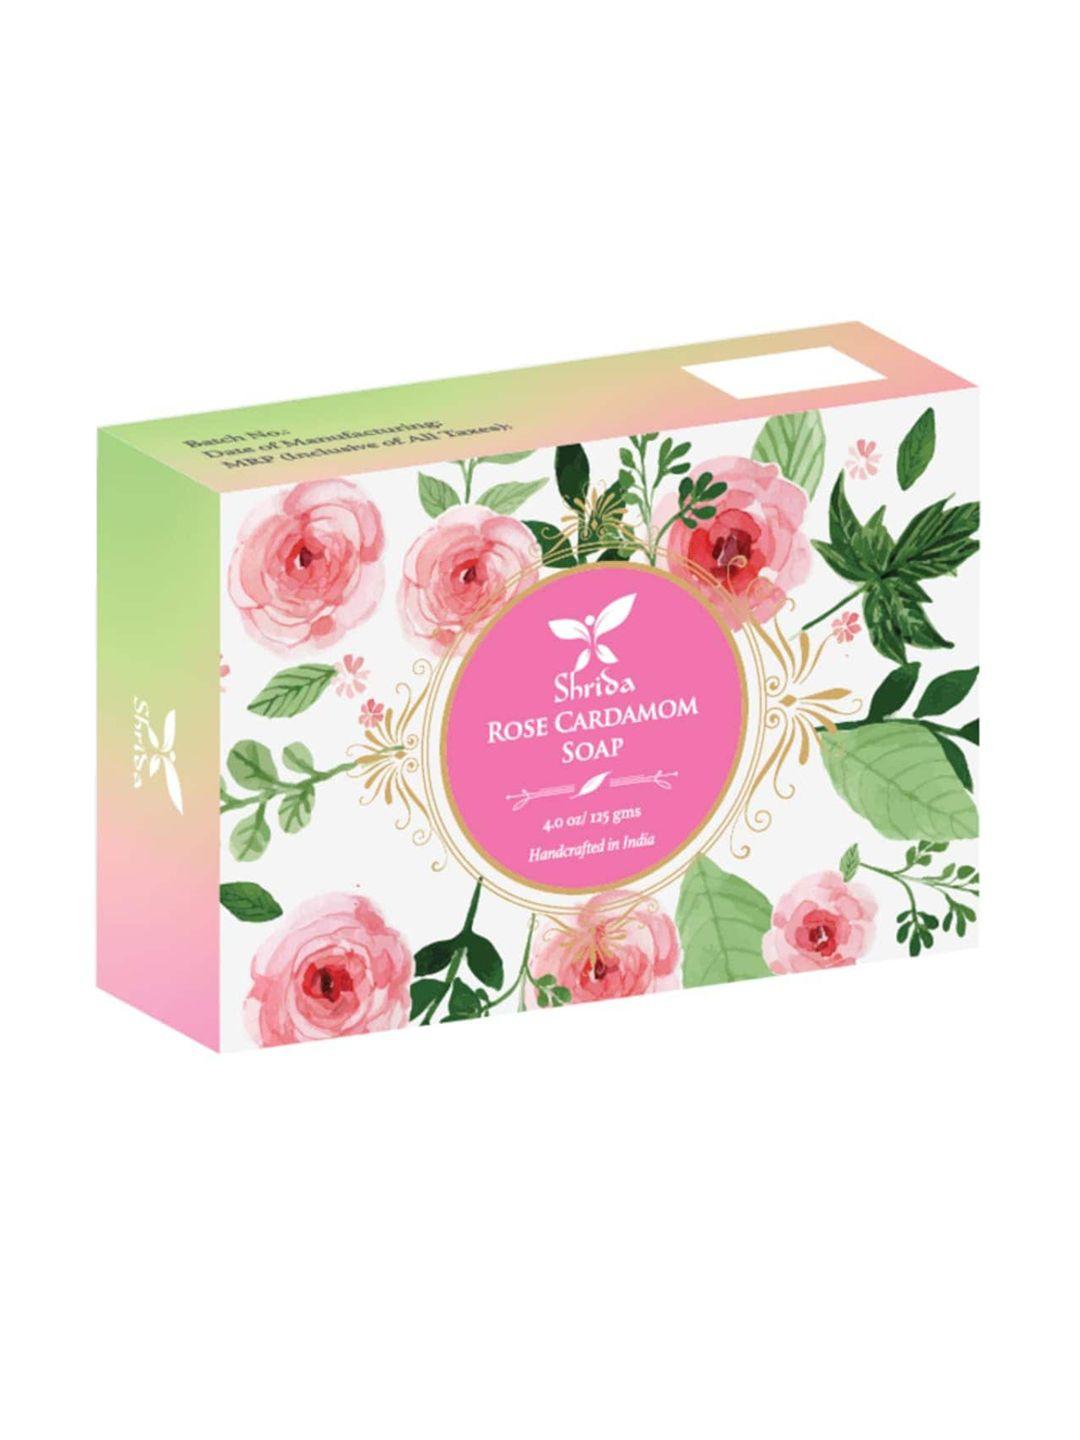 shrida cruelty-free handmade rose cardamom soap - 125 g